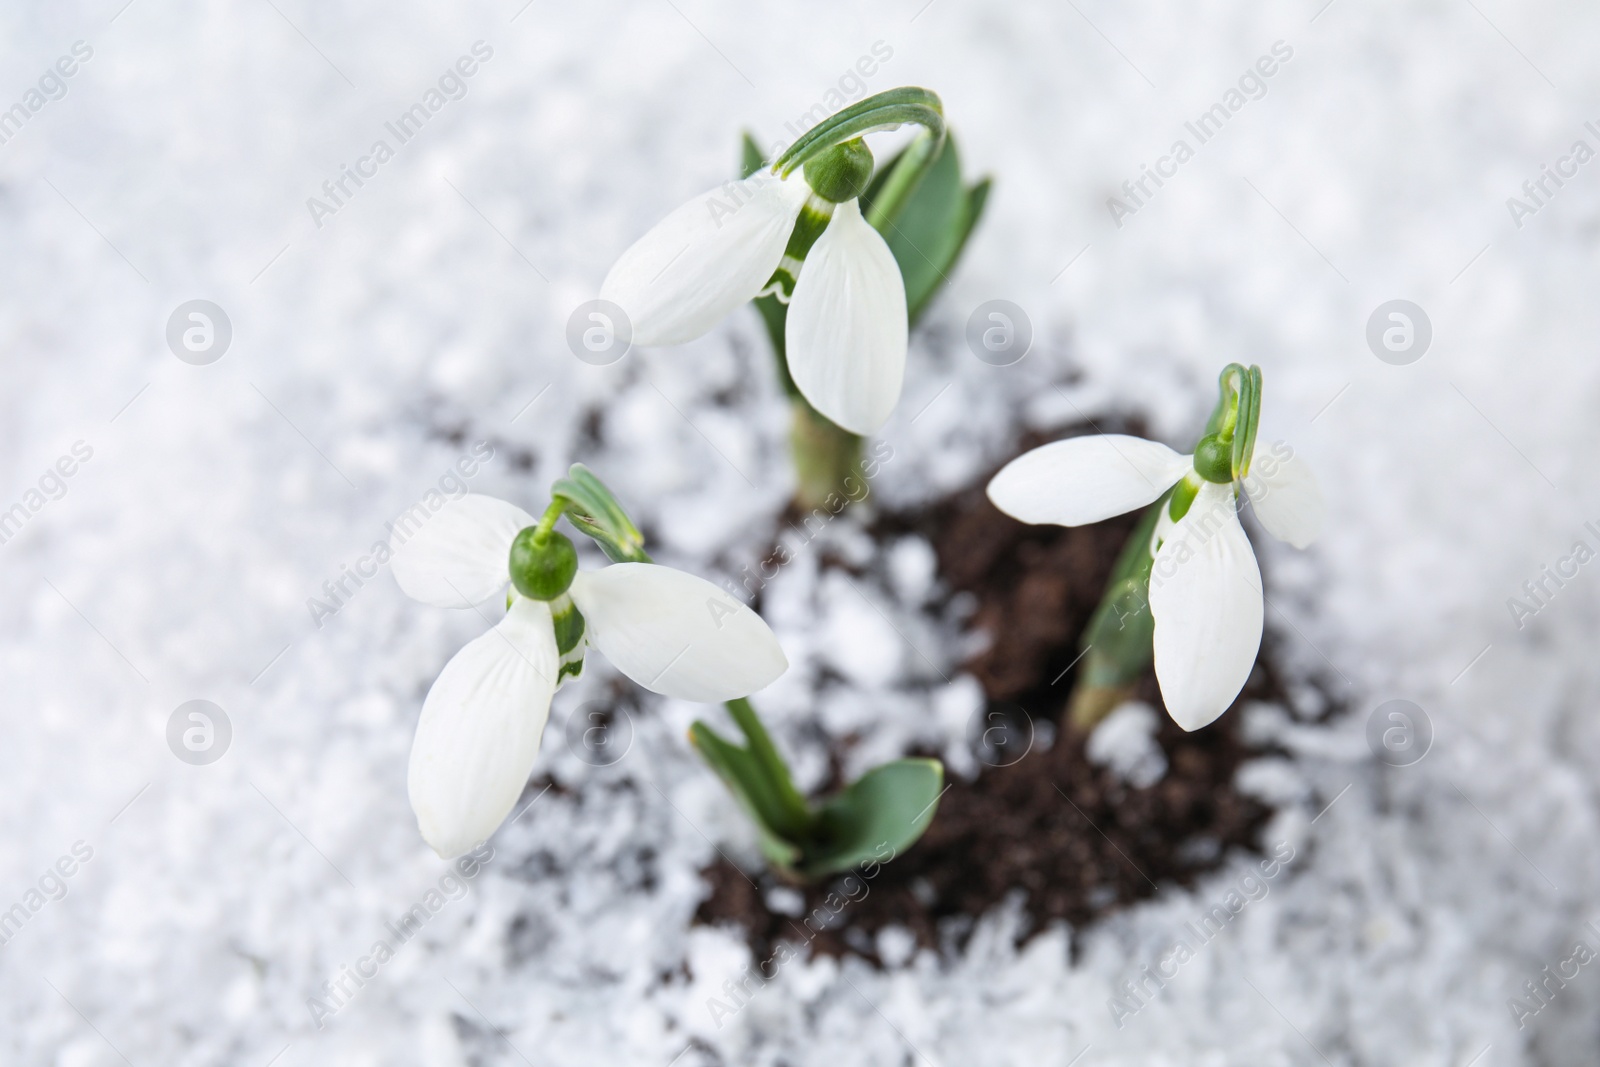 Photo of Fresh blooming snowdrop flowers growing through snow. Springtime